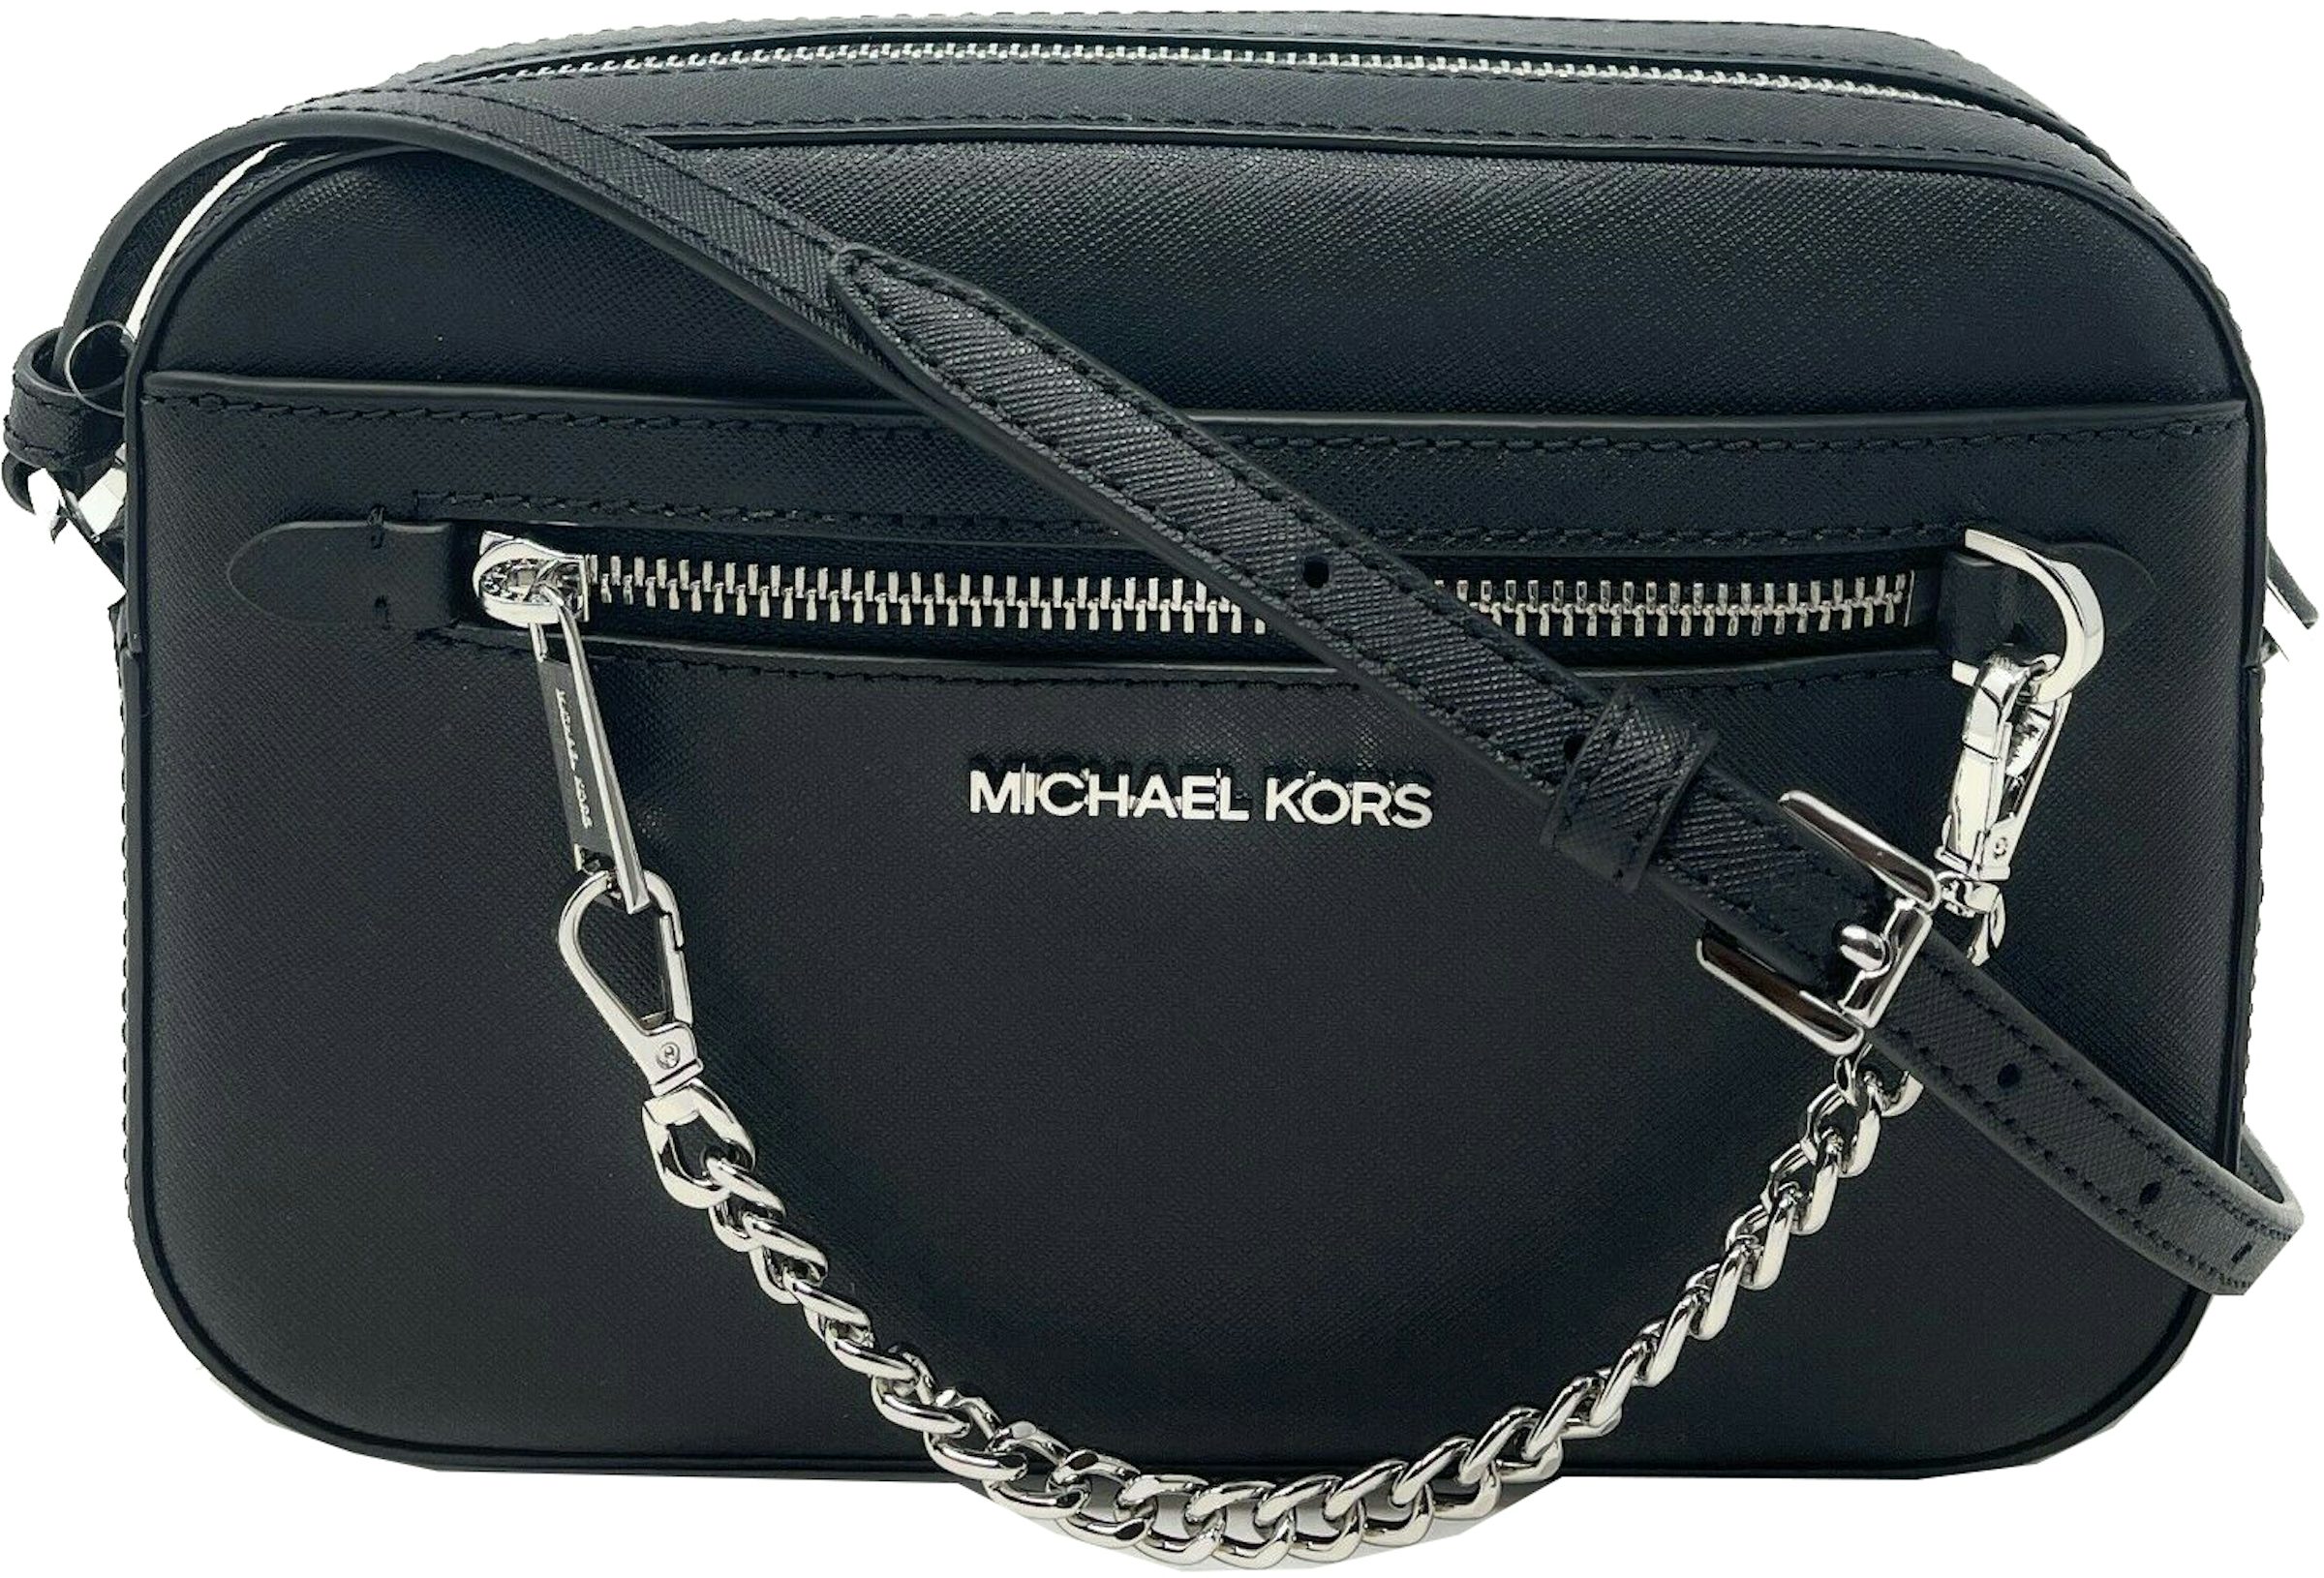 Michael Kors Jet Set Large X Cross Chain Shoulder Tote Bag